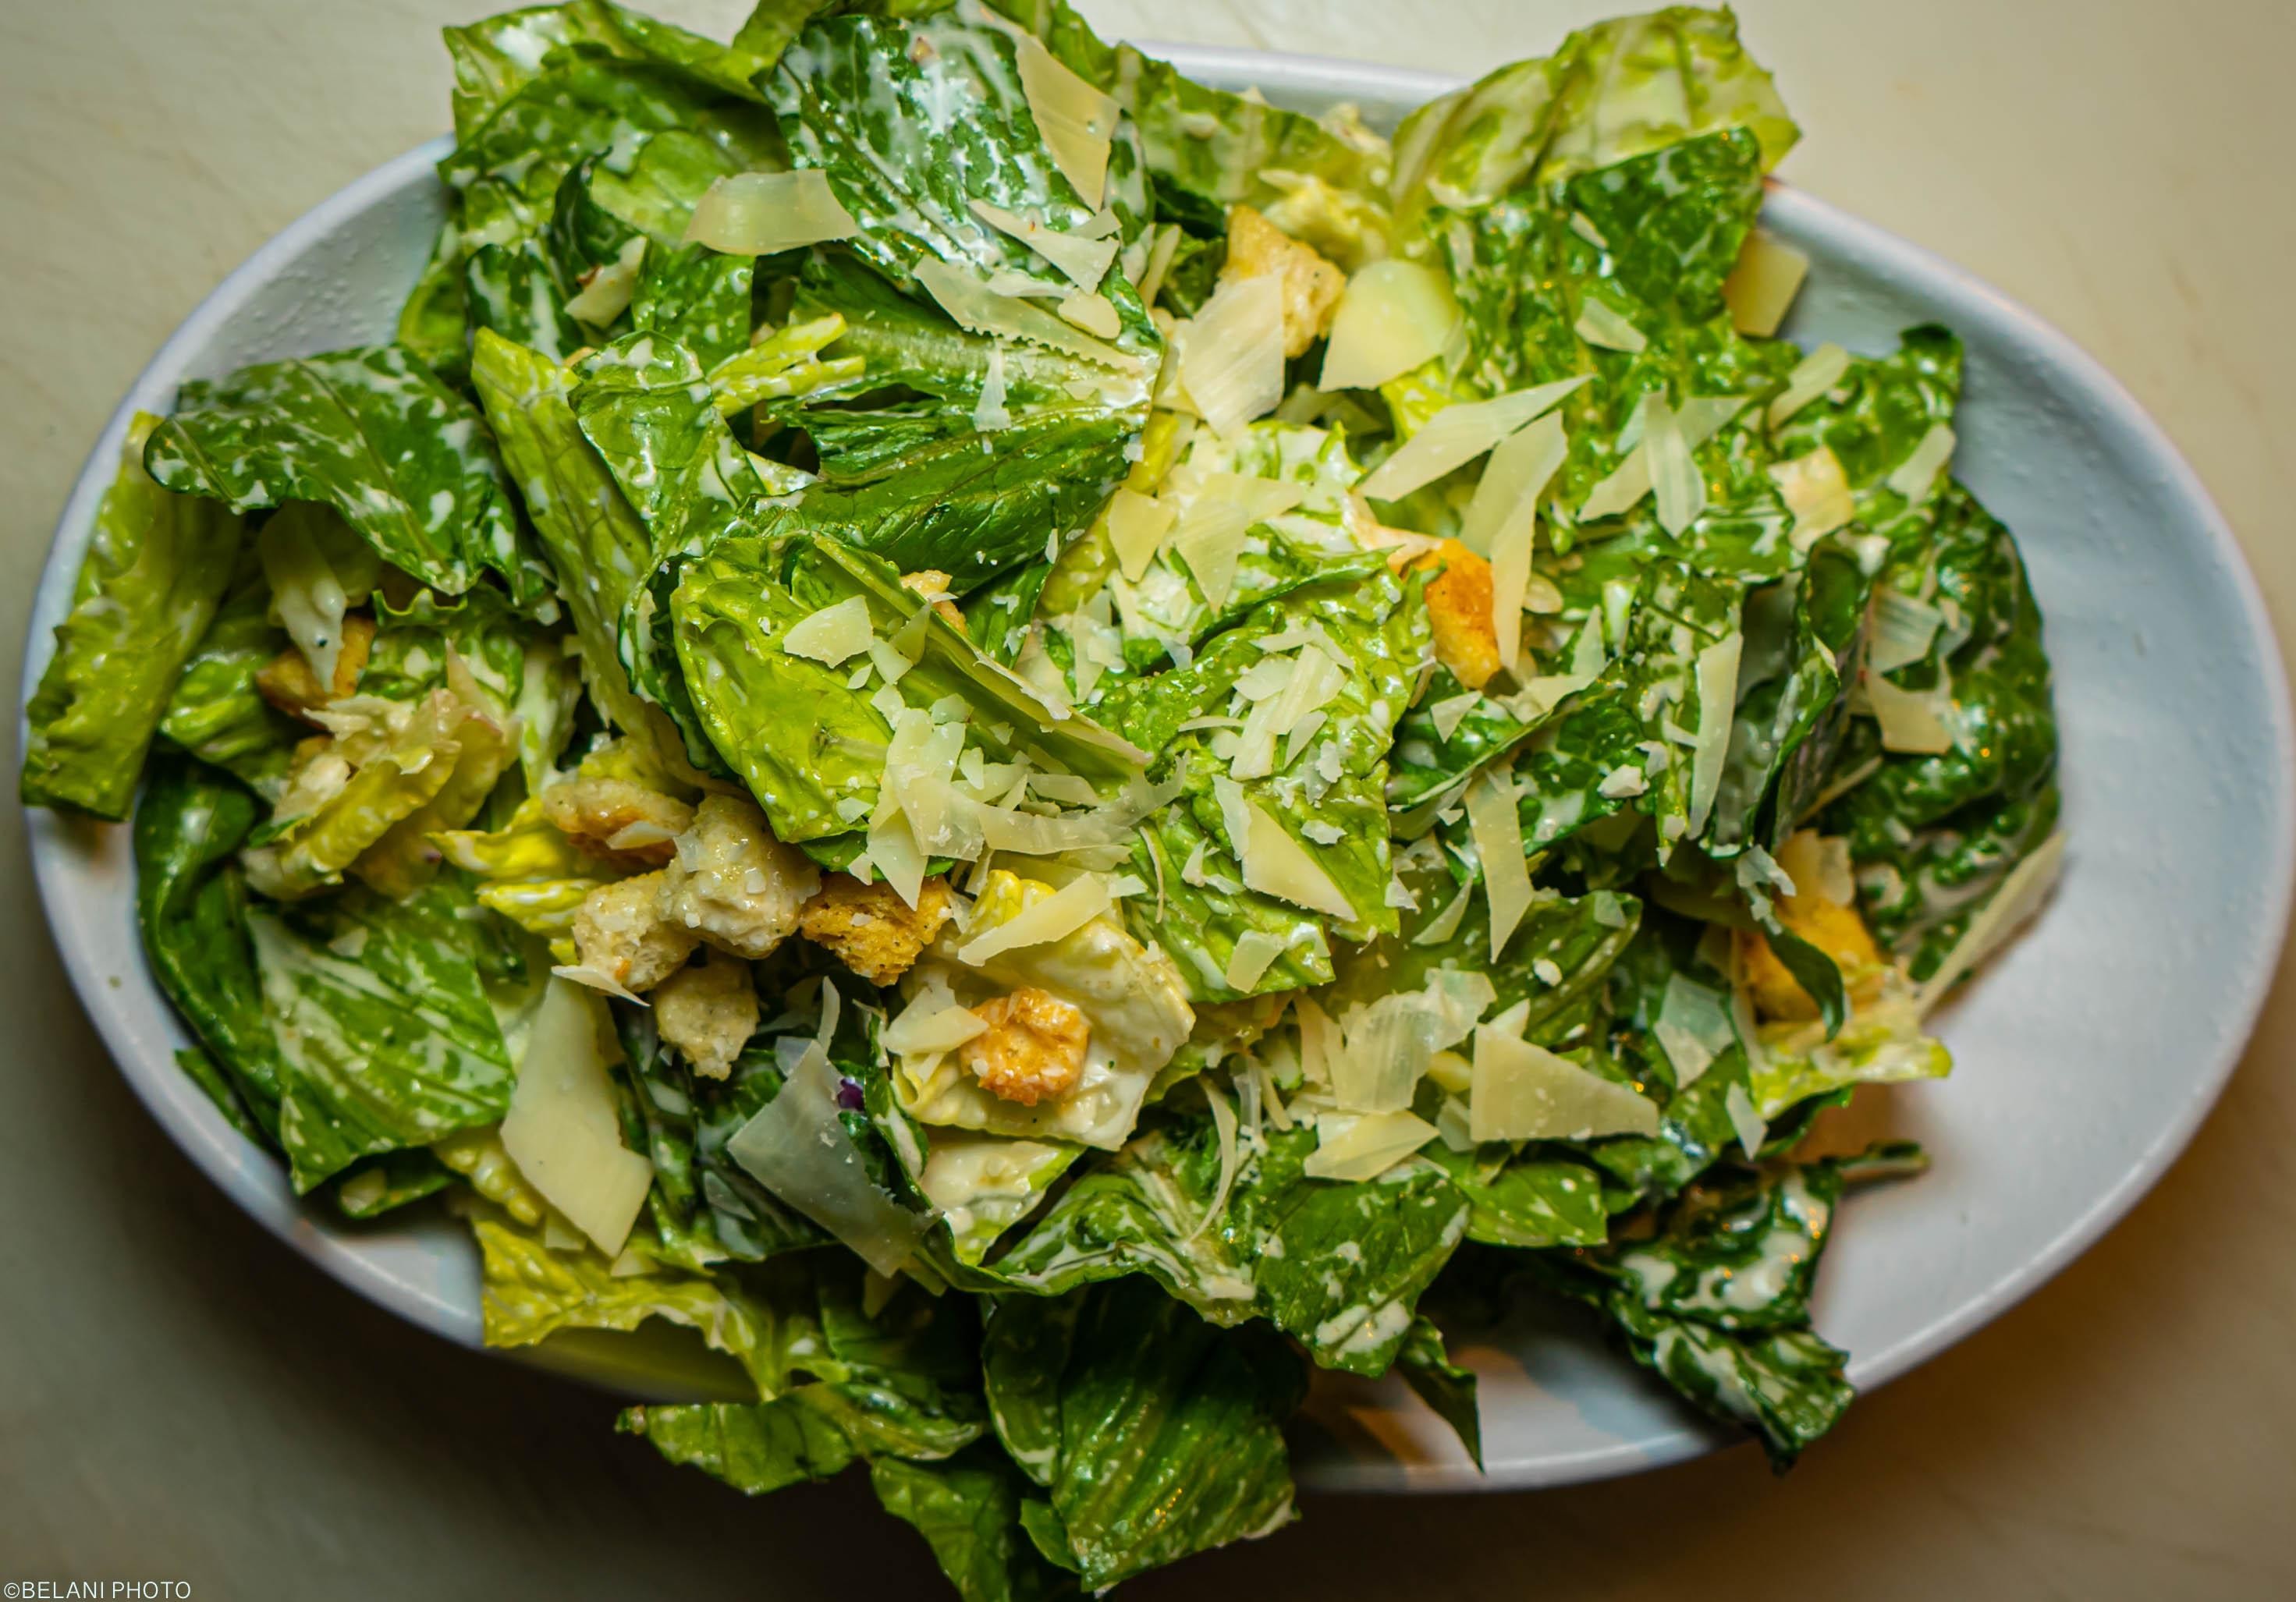 SD Caesar Salad